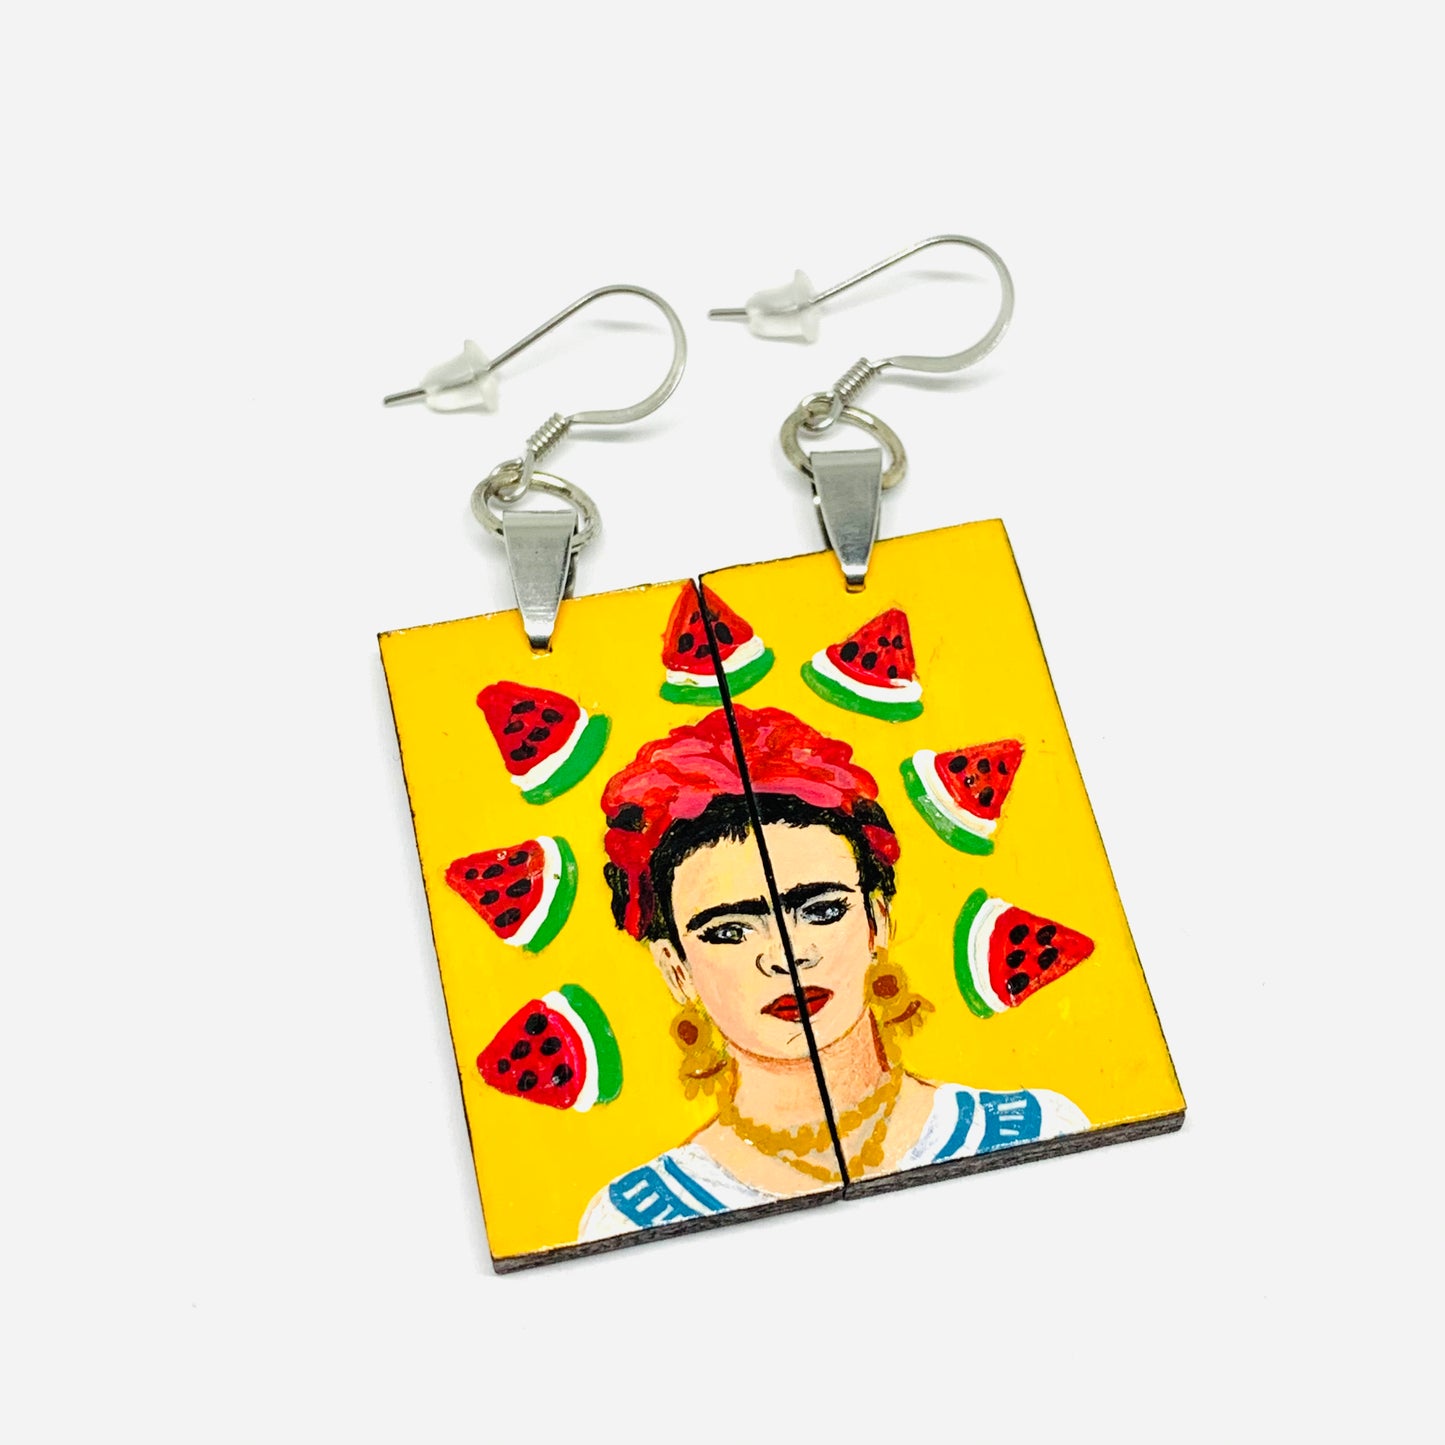 Frida Kahlo Earrings with Hand painted Mexico folk art watermelon. Mexican jewelry inspired portrait. Joyeria mexicana aretes para mujer 